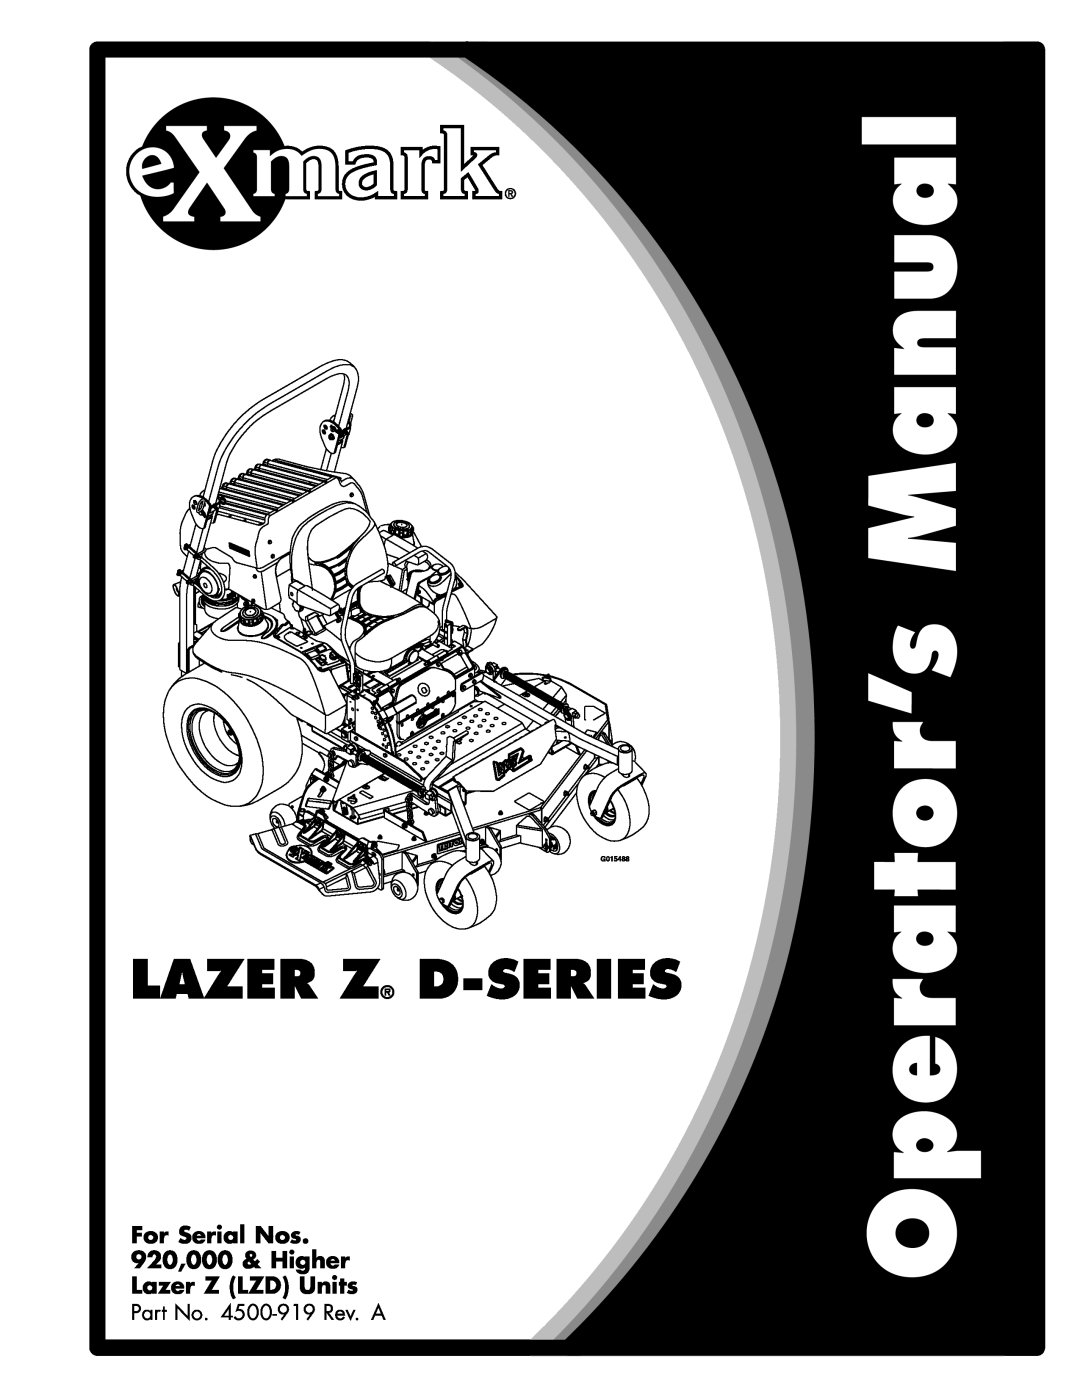 Exmark manual Lazer Z D-Series, For Serial Nos 920,000 & Higher Lazer Z LZD Units 